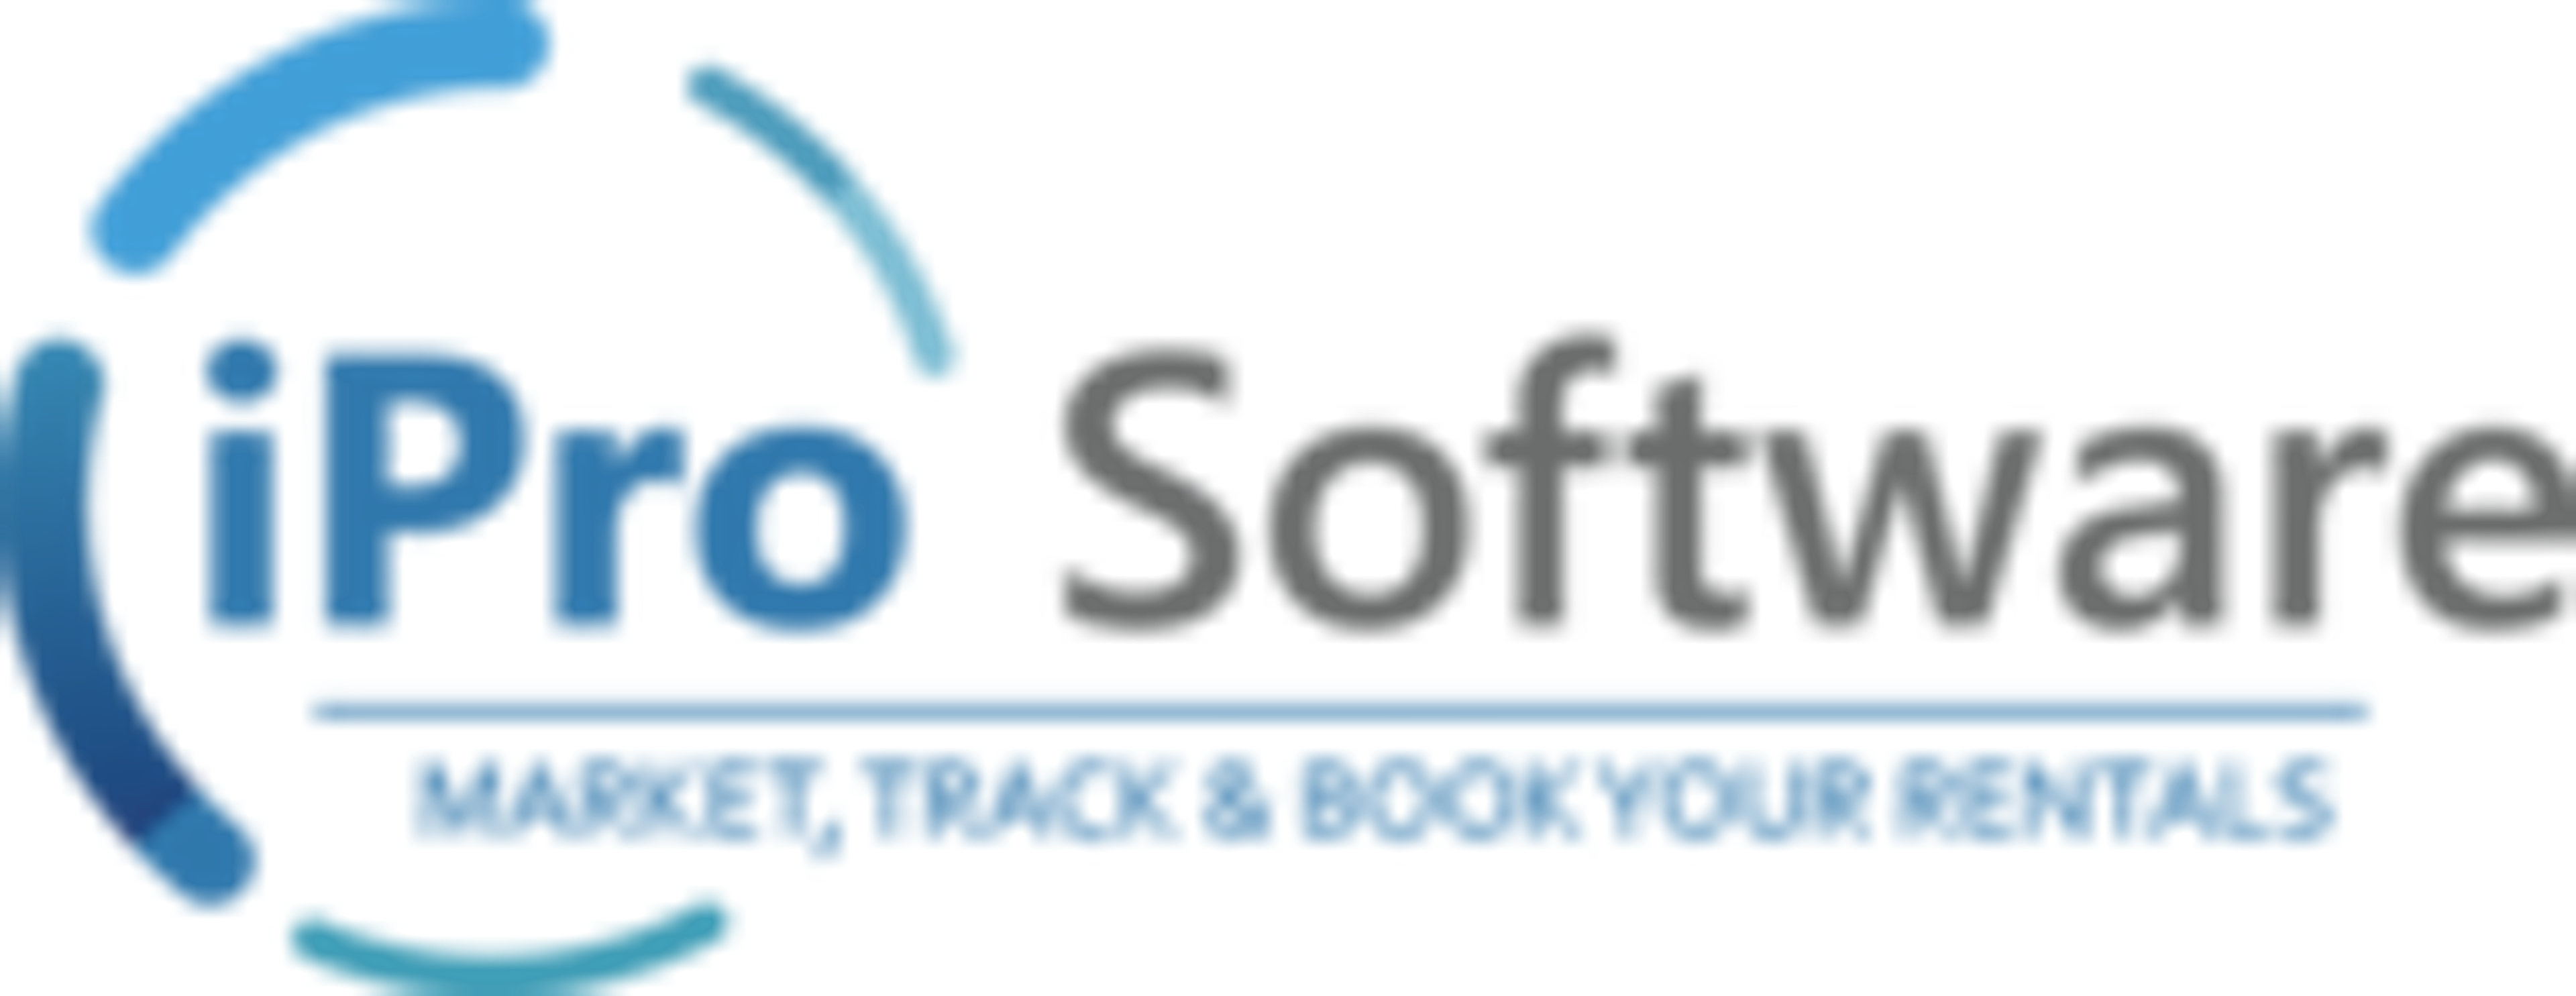 I-Pro Booking System Logo